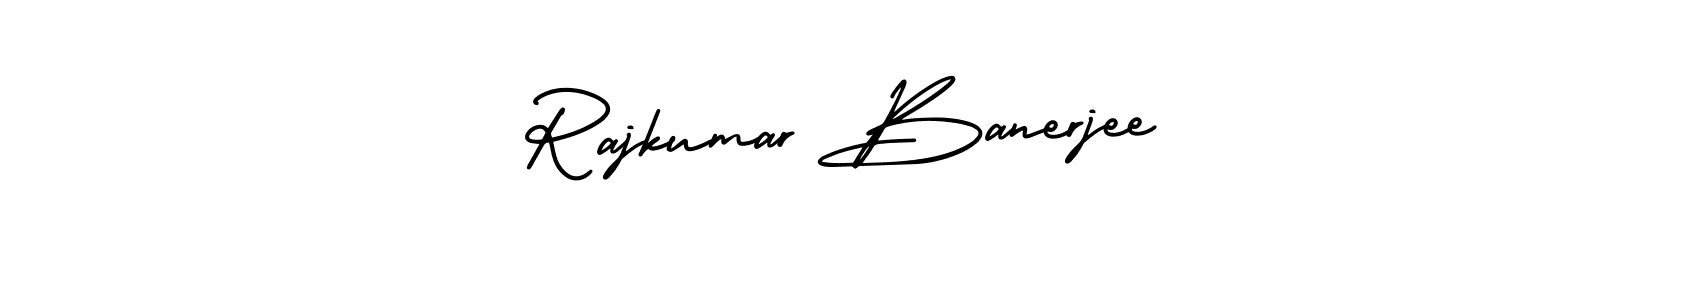 How to Draw Rajkumar Banerjee signature style? AmerikaSignatureDemo-Regular is a latest design signature styles for name Rajkumar Banerjee. Rajkumar Banerjee signature style 3 images and pictures png